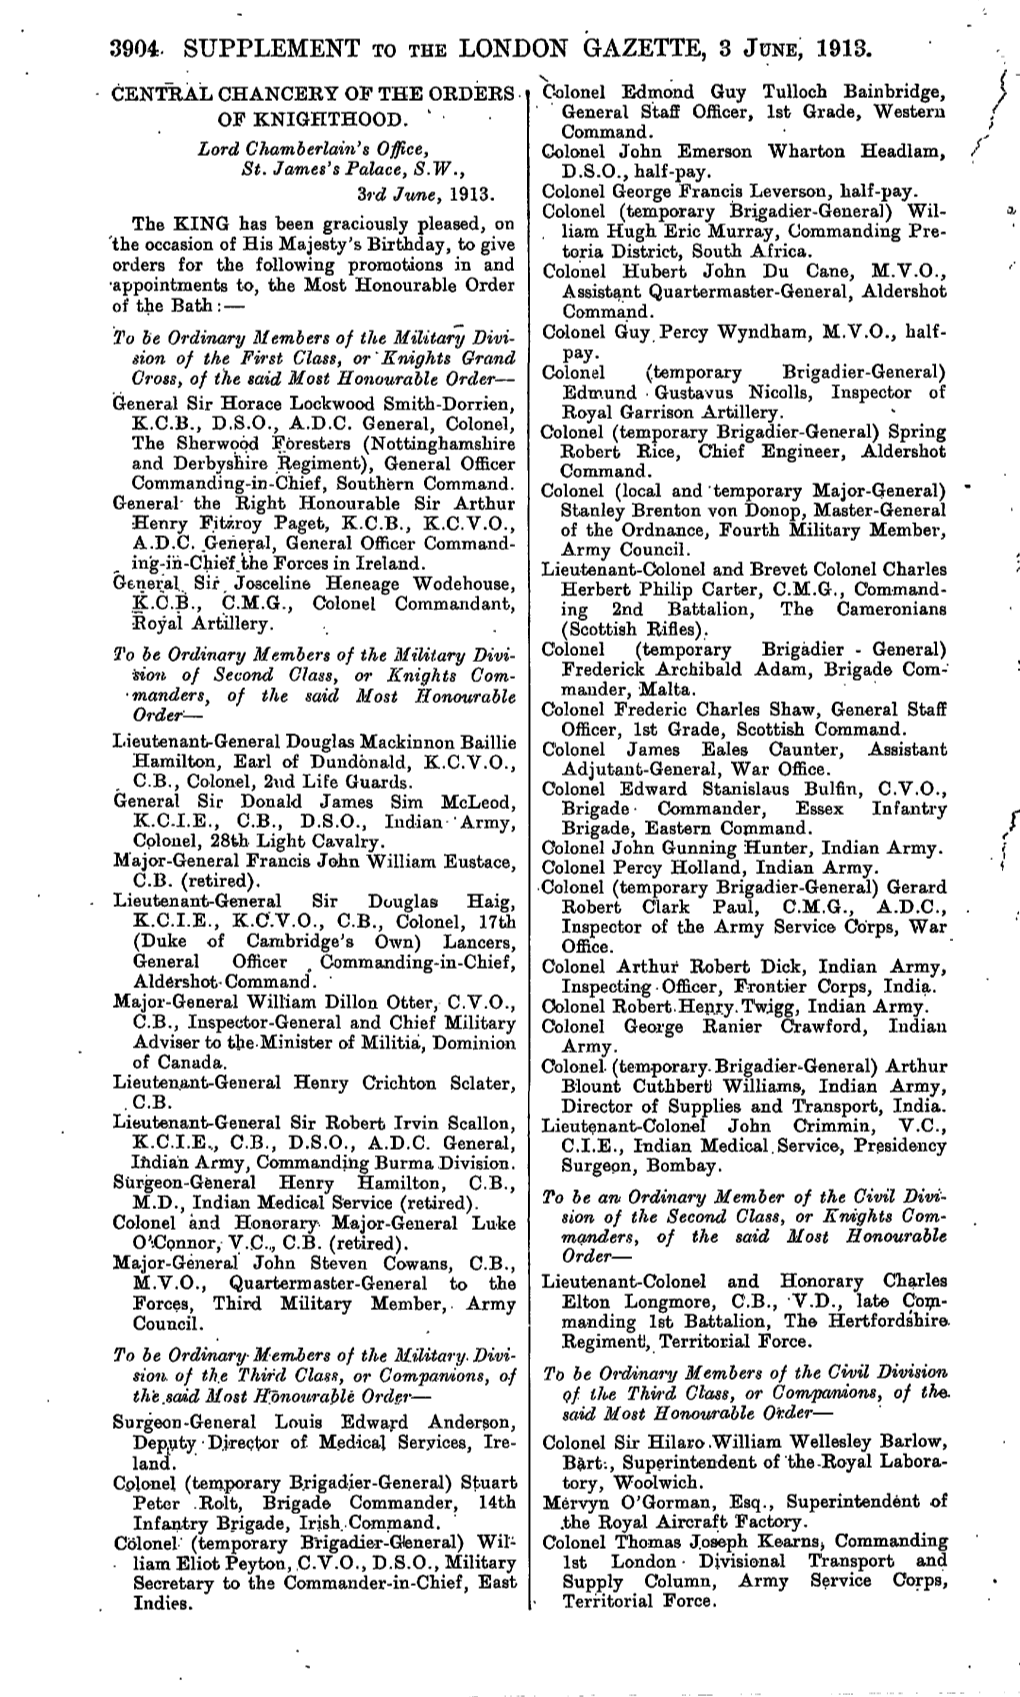 3904. Supplement to the London Gazette, 3 June, 1913